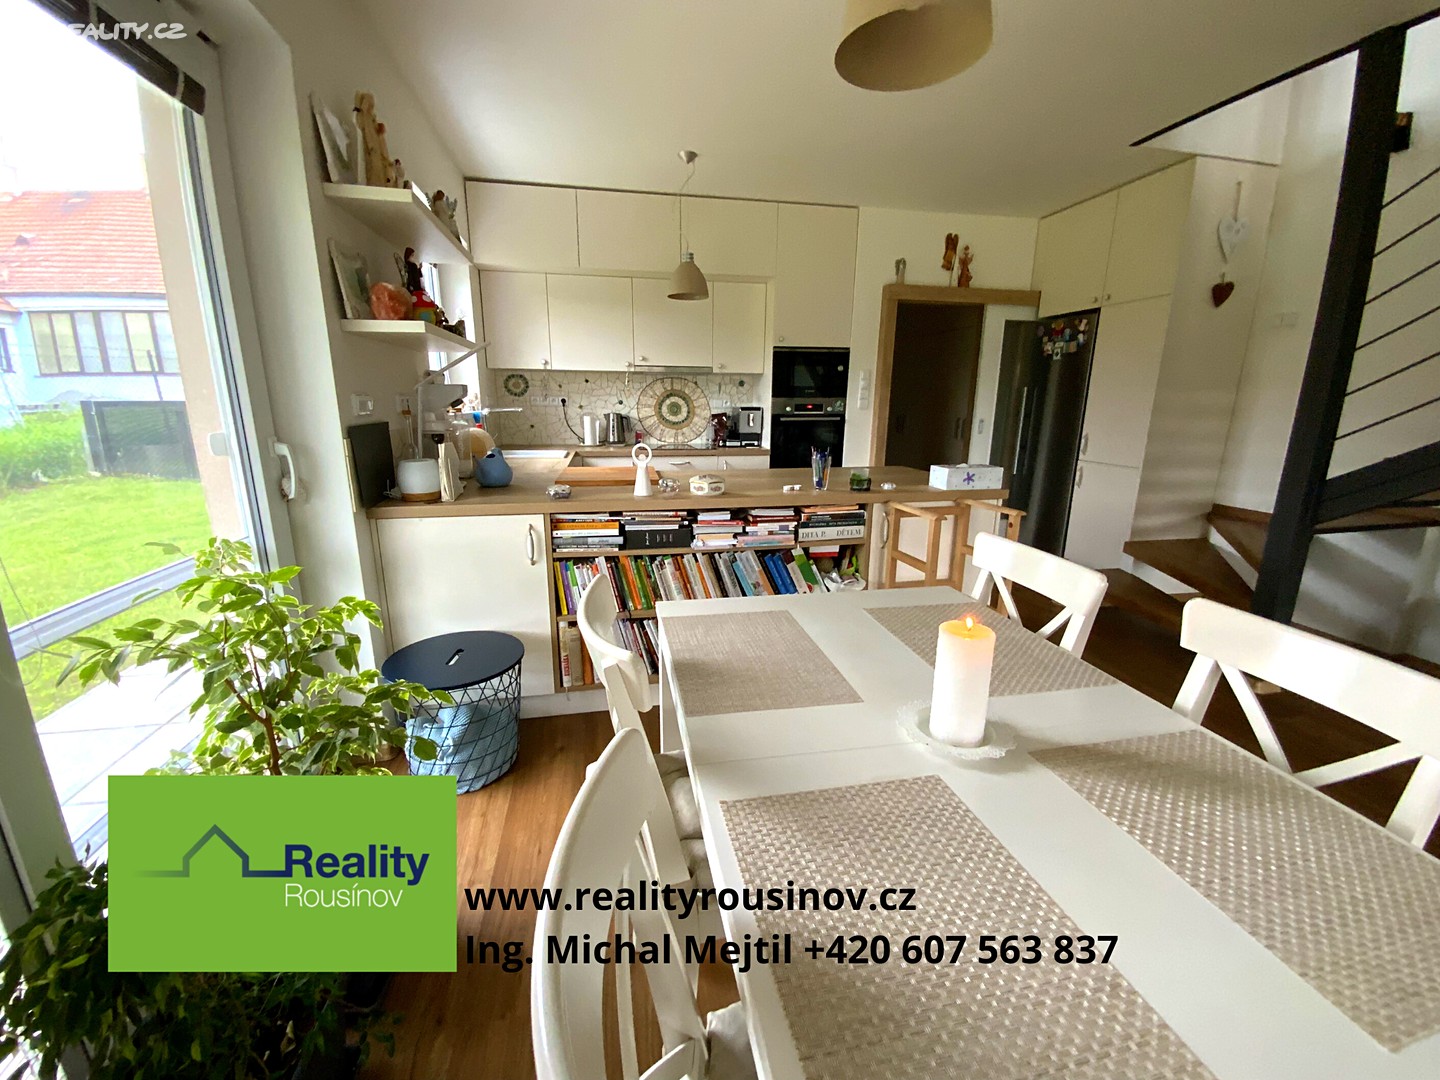 Prodej  rodinného domu 149 m², pozemek 1 130 m², Rousínov - Vítovice, okres Vyškov